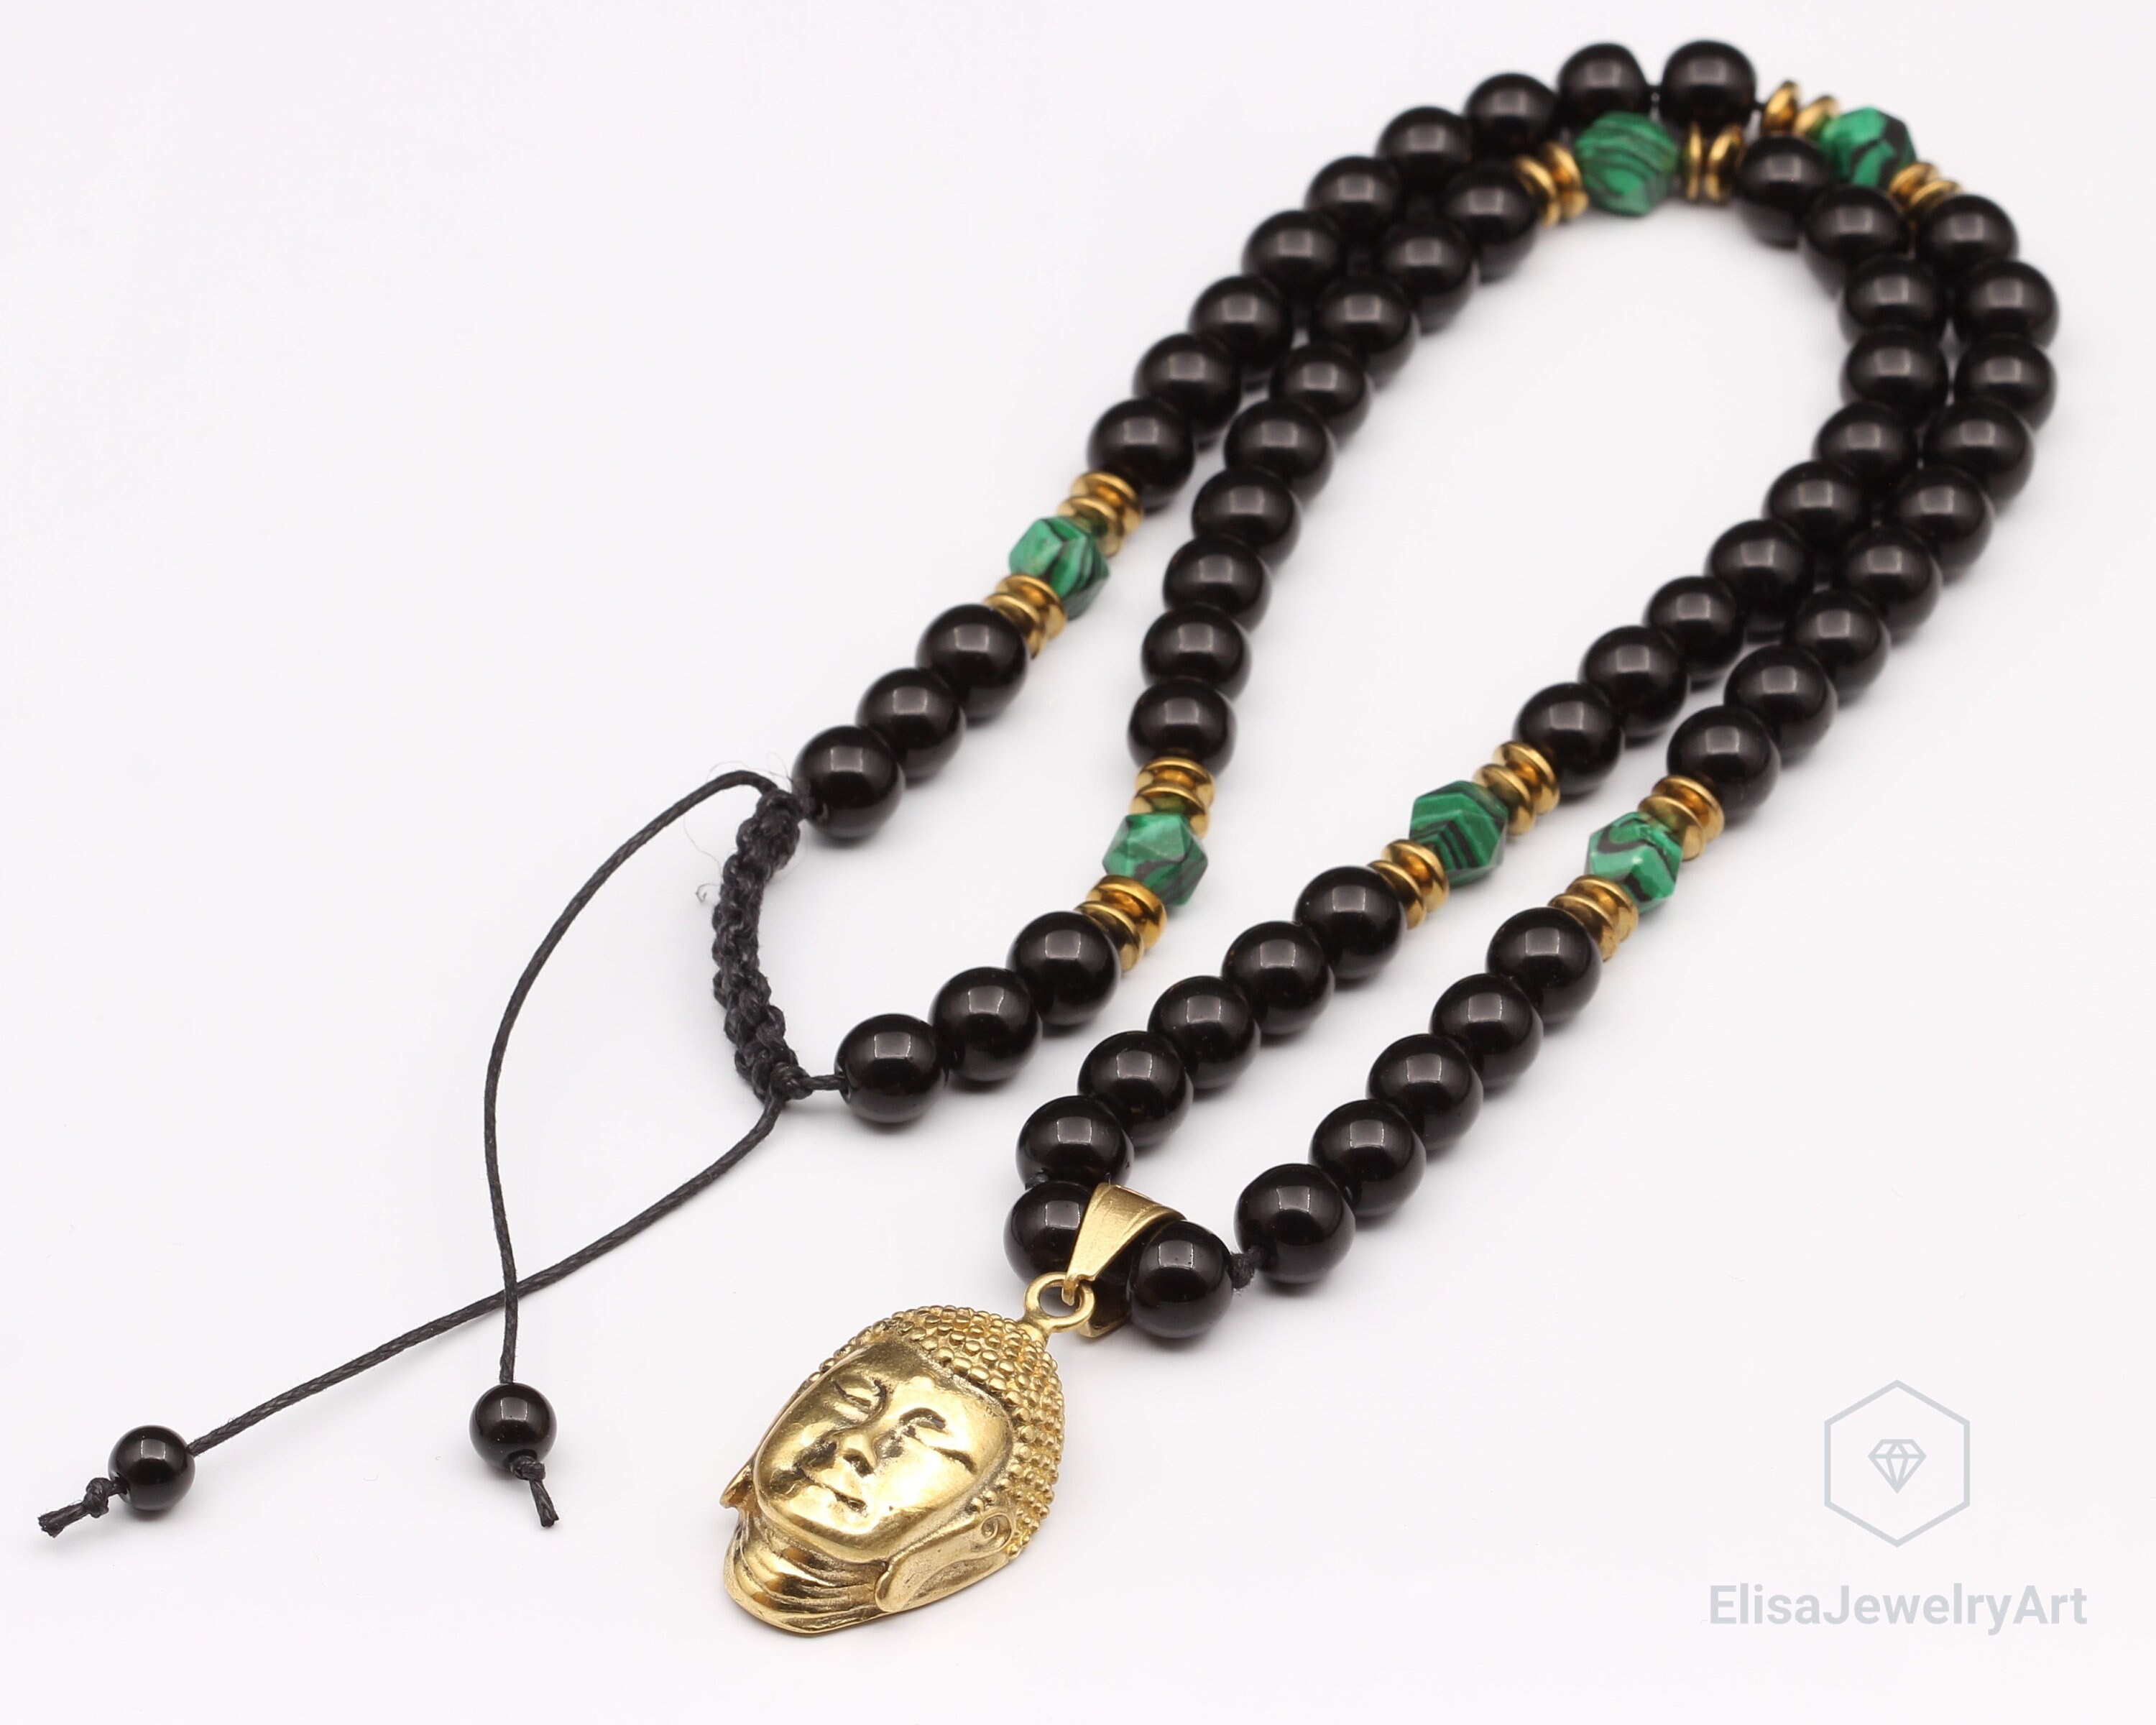 Edle lange Mala Kette aus Nepal mit Buddha-Amulett aus echtem schwarzem Onyx 